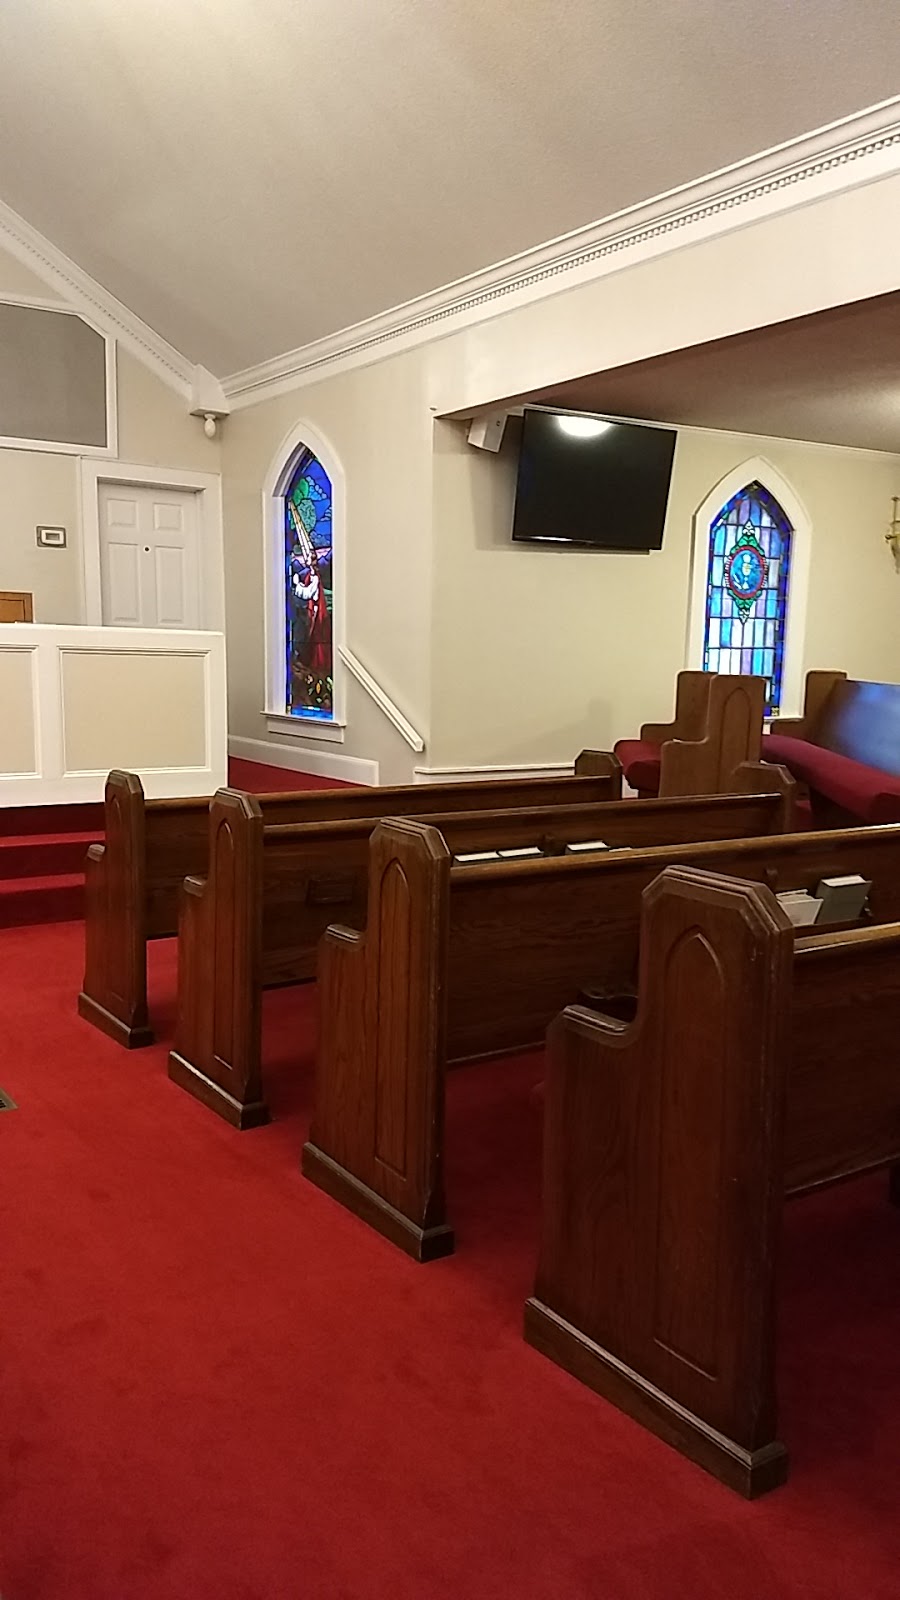 Flat Rock Baptist Church - church  | Photo 3 of 3 | Address: 1529 Flat Rock Church Rd, Louisburg, NC 27549, USA | Phone: (919) 556-1622